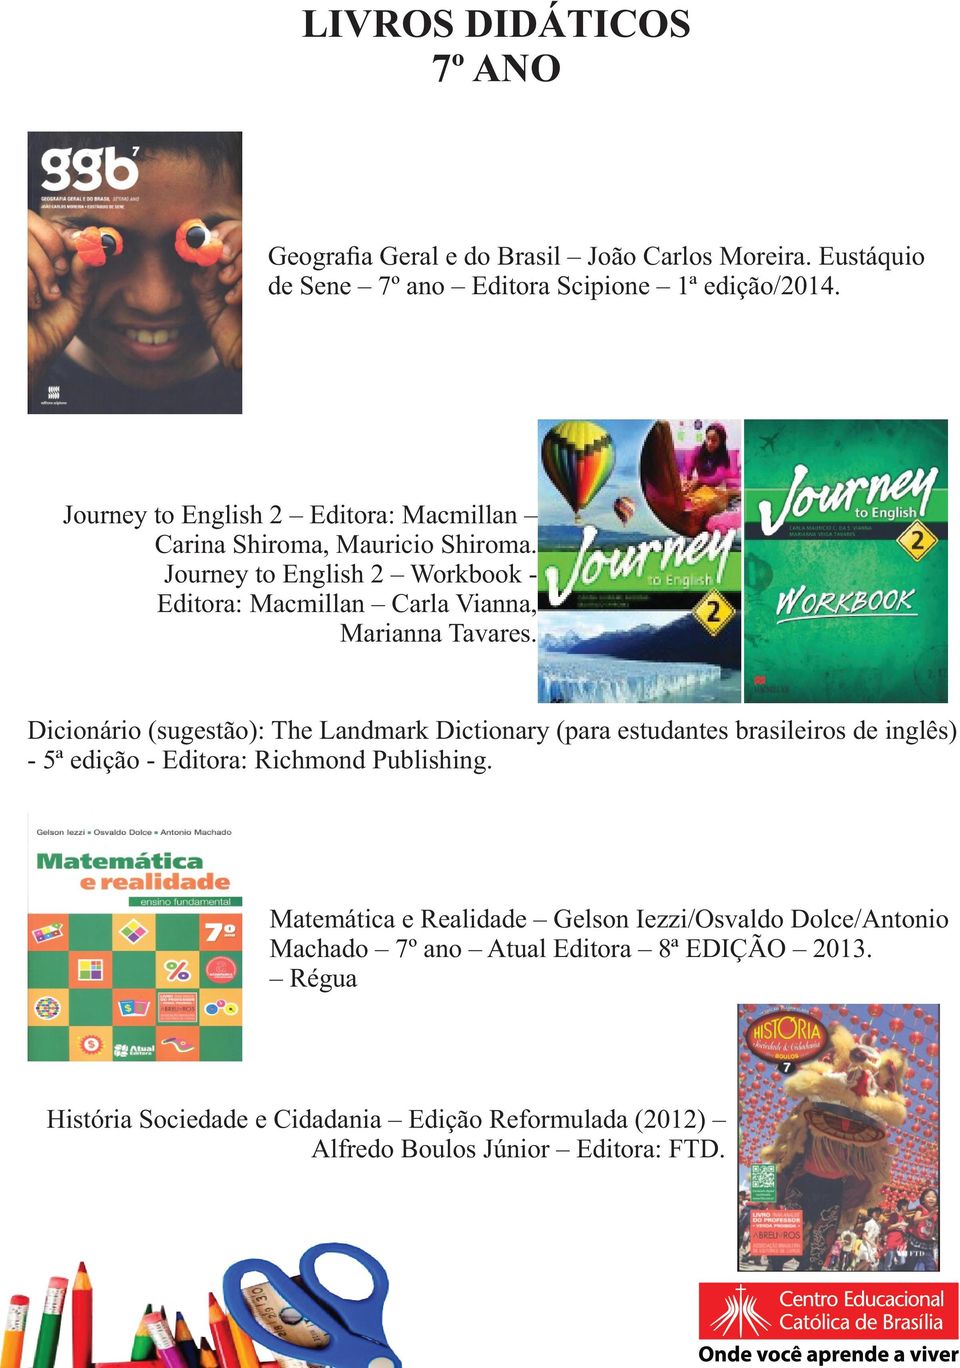 Journey to English 2 Workbook - Editora: Macmillan Carla Vianna, Marianna Tavares.